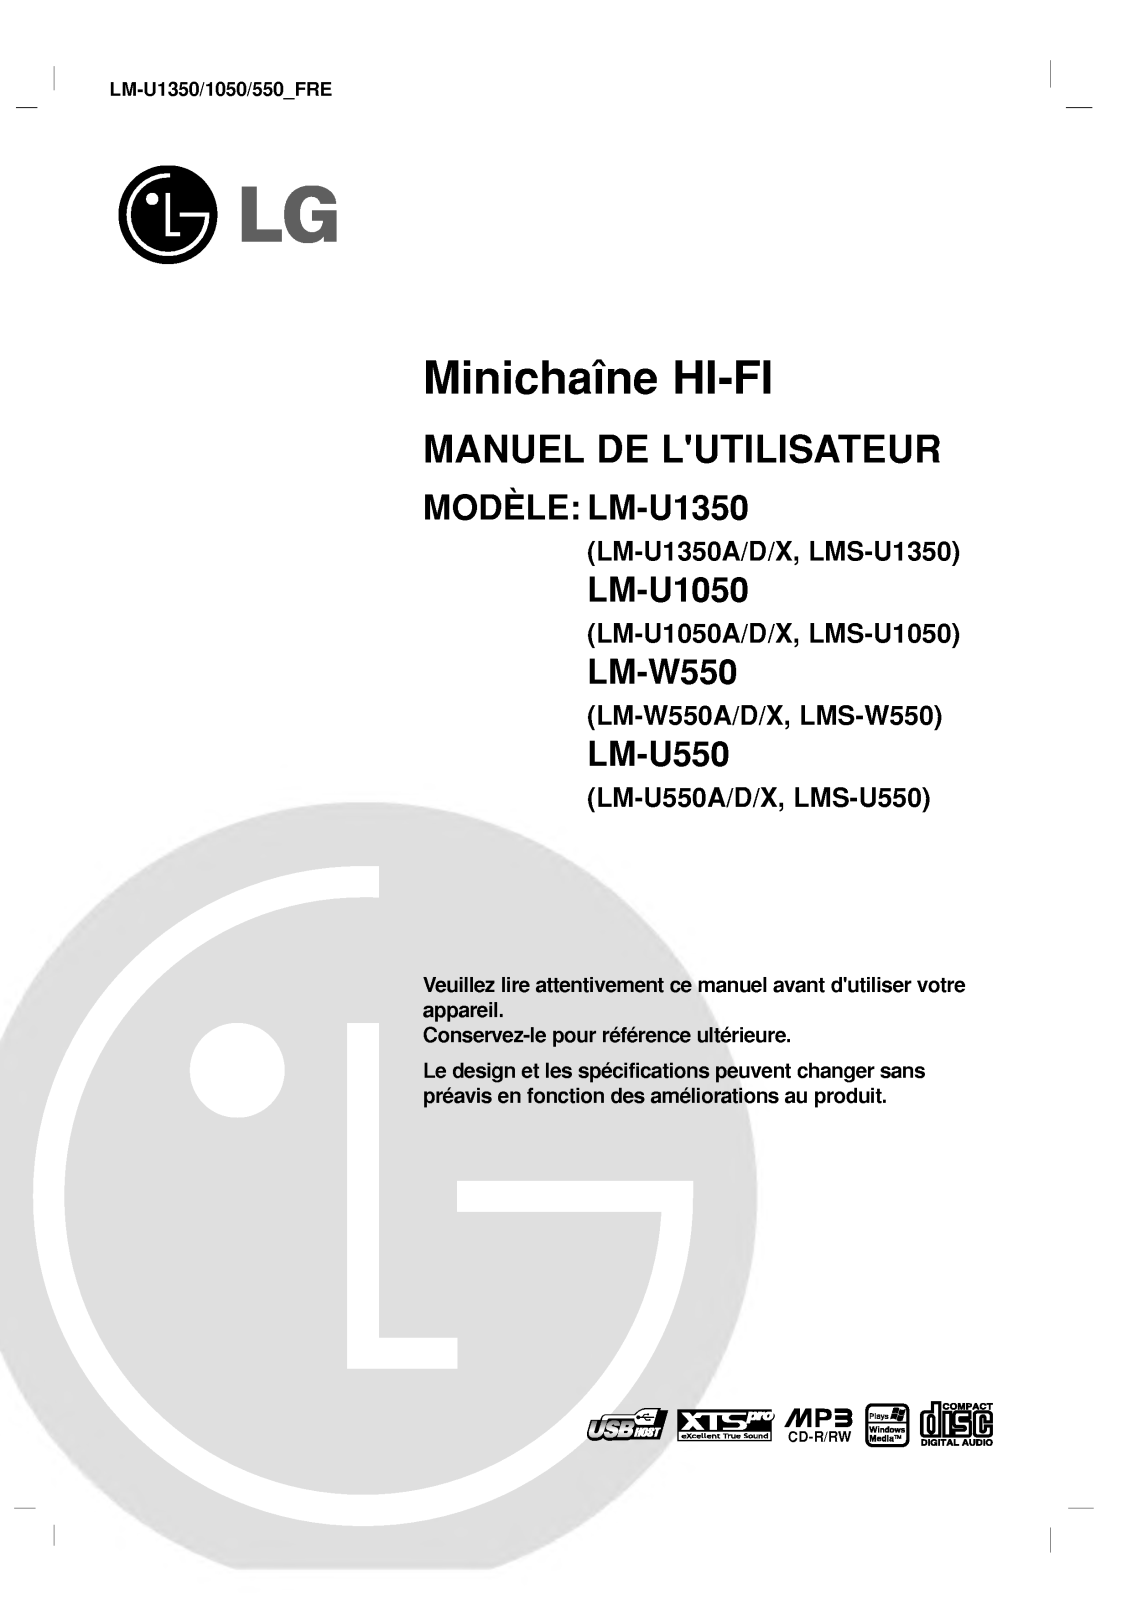 LG LM-U550 User Manual